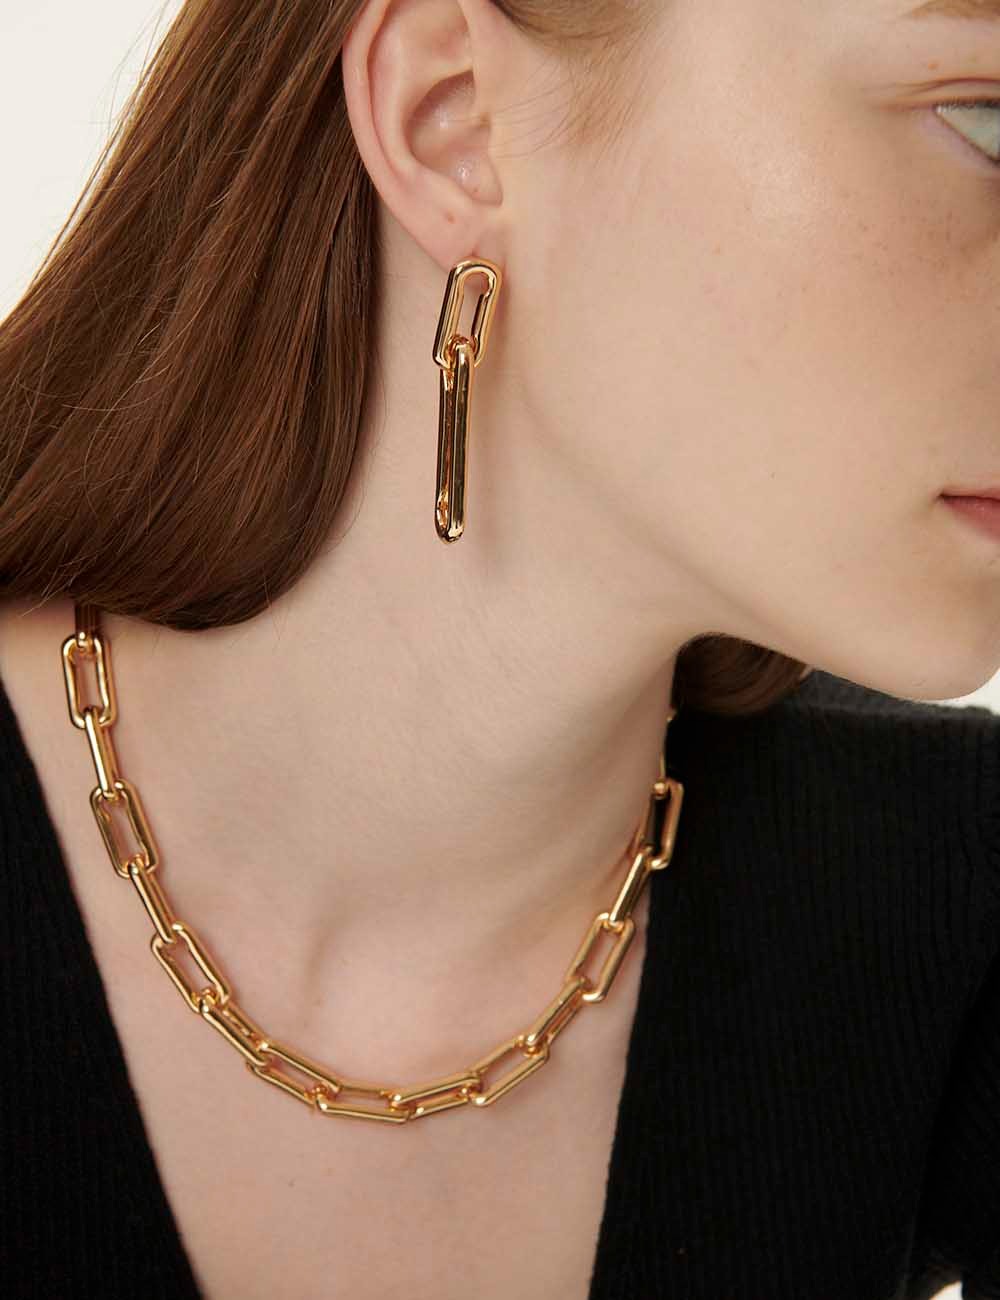 Chunky chain earrings